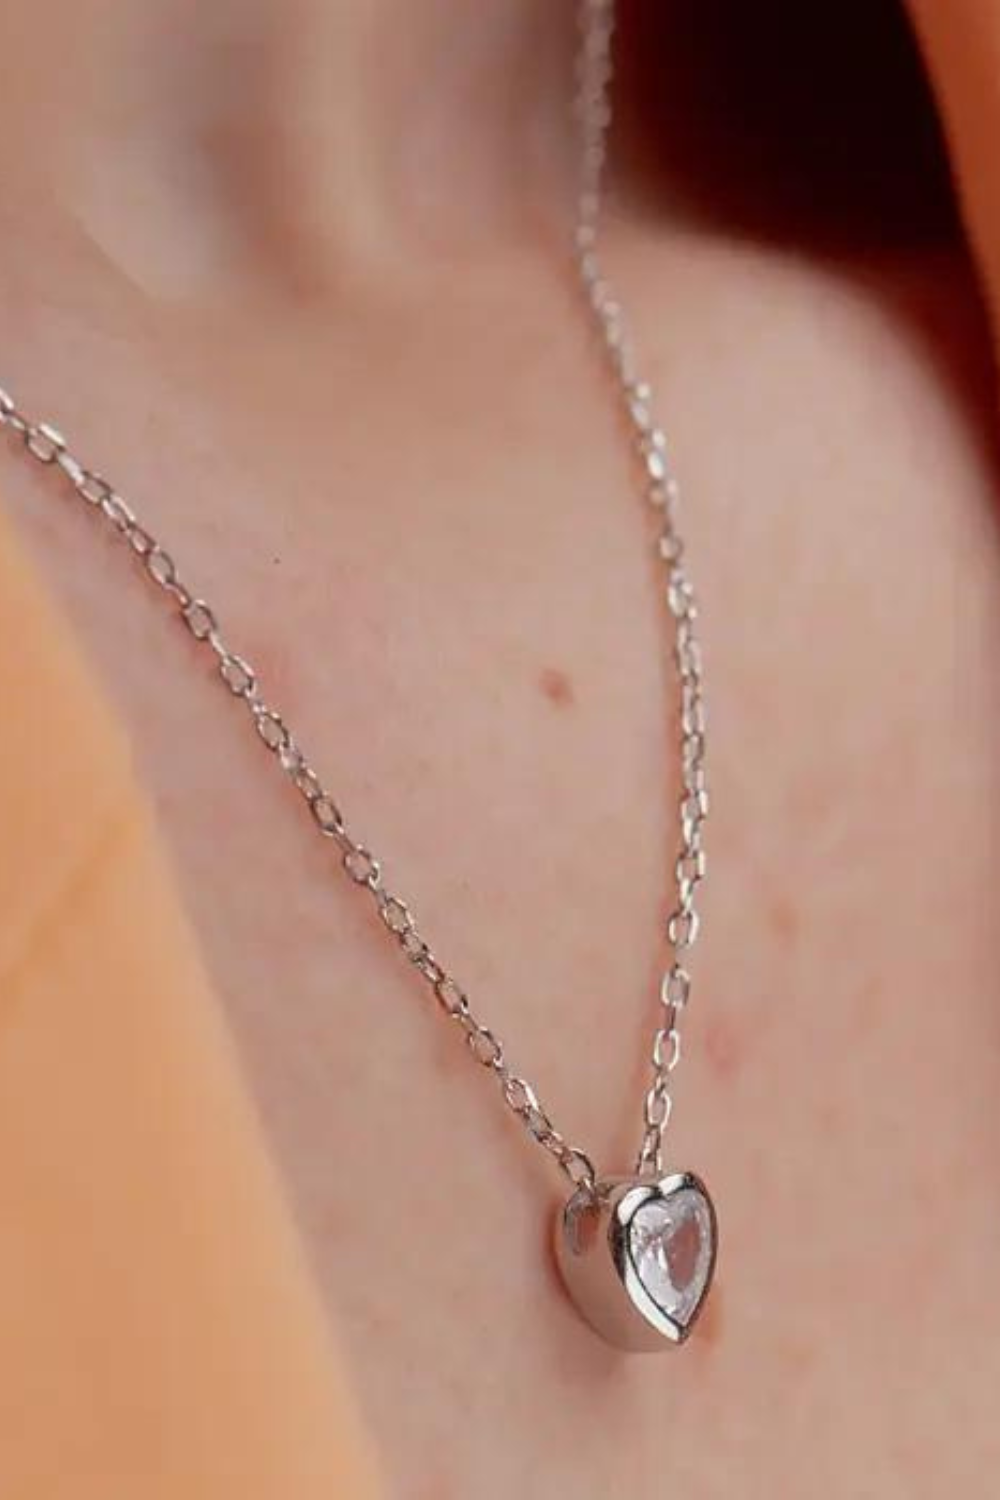 Juliet necklace, (SILVERAMO), KL2F.417-48